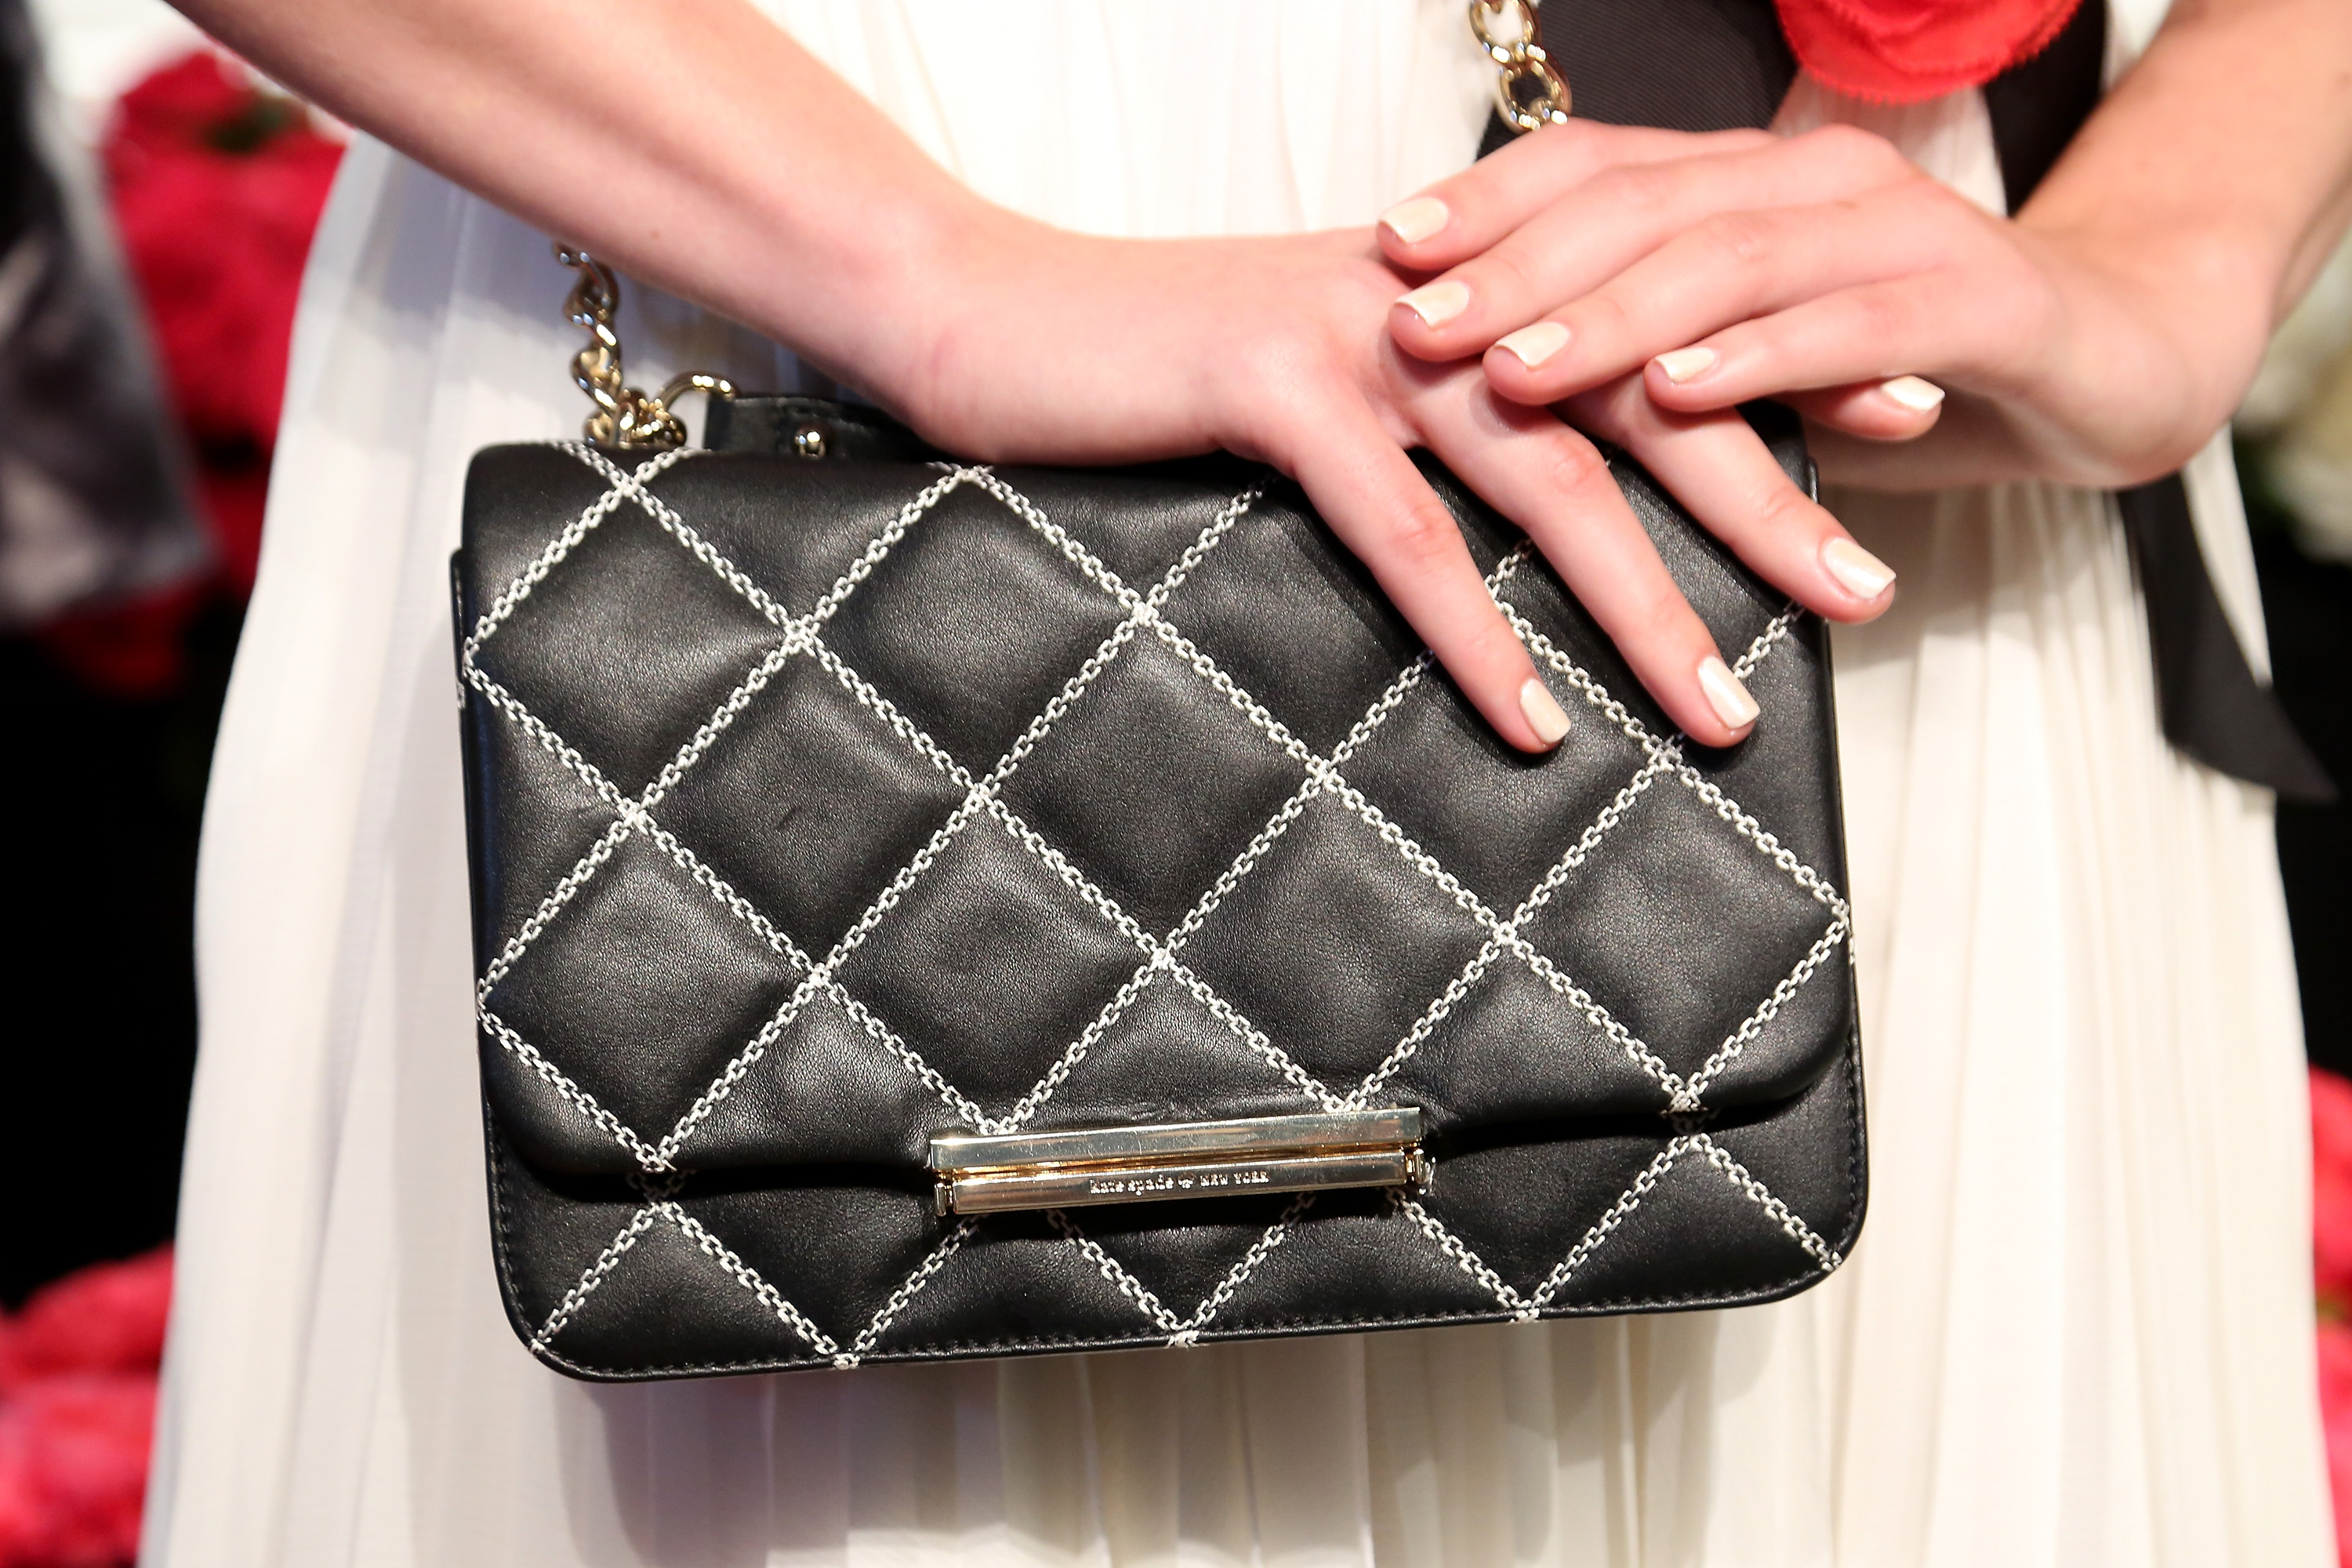 Kate Spade designer sale, get up to 50% off purses, wallets and more -  mlive.com